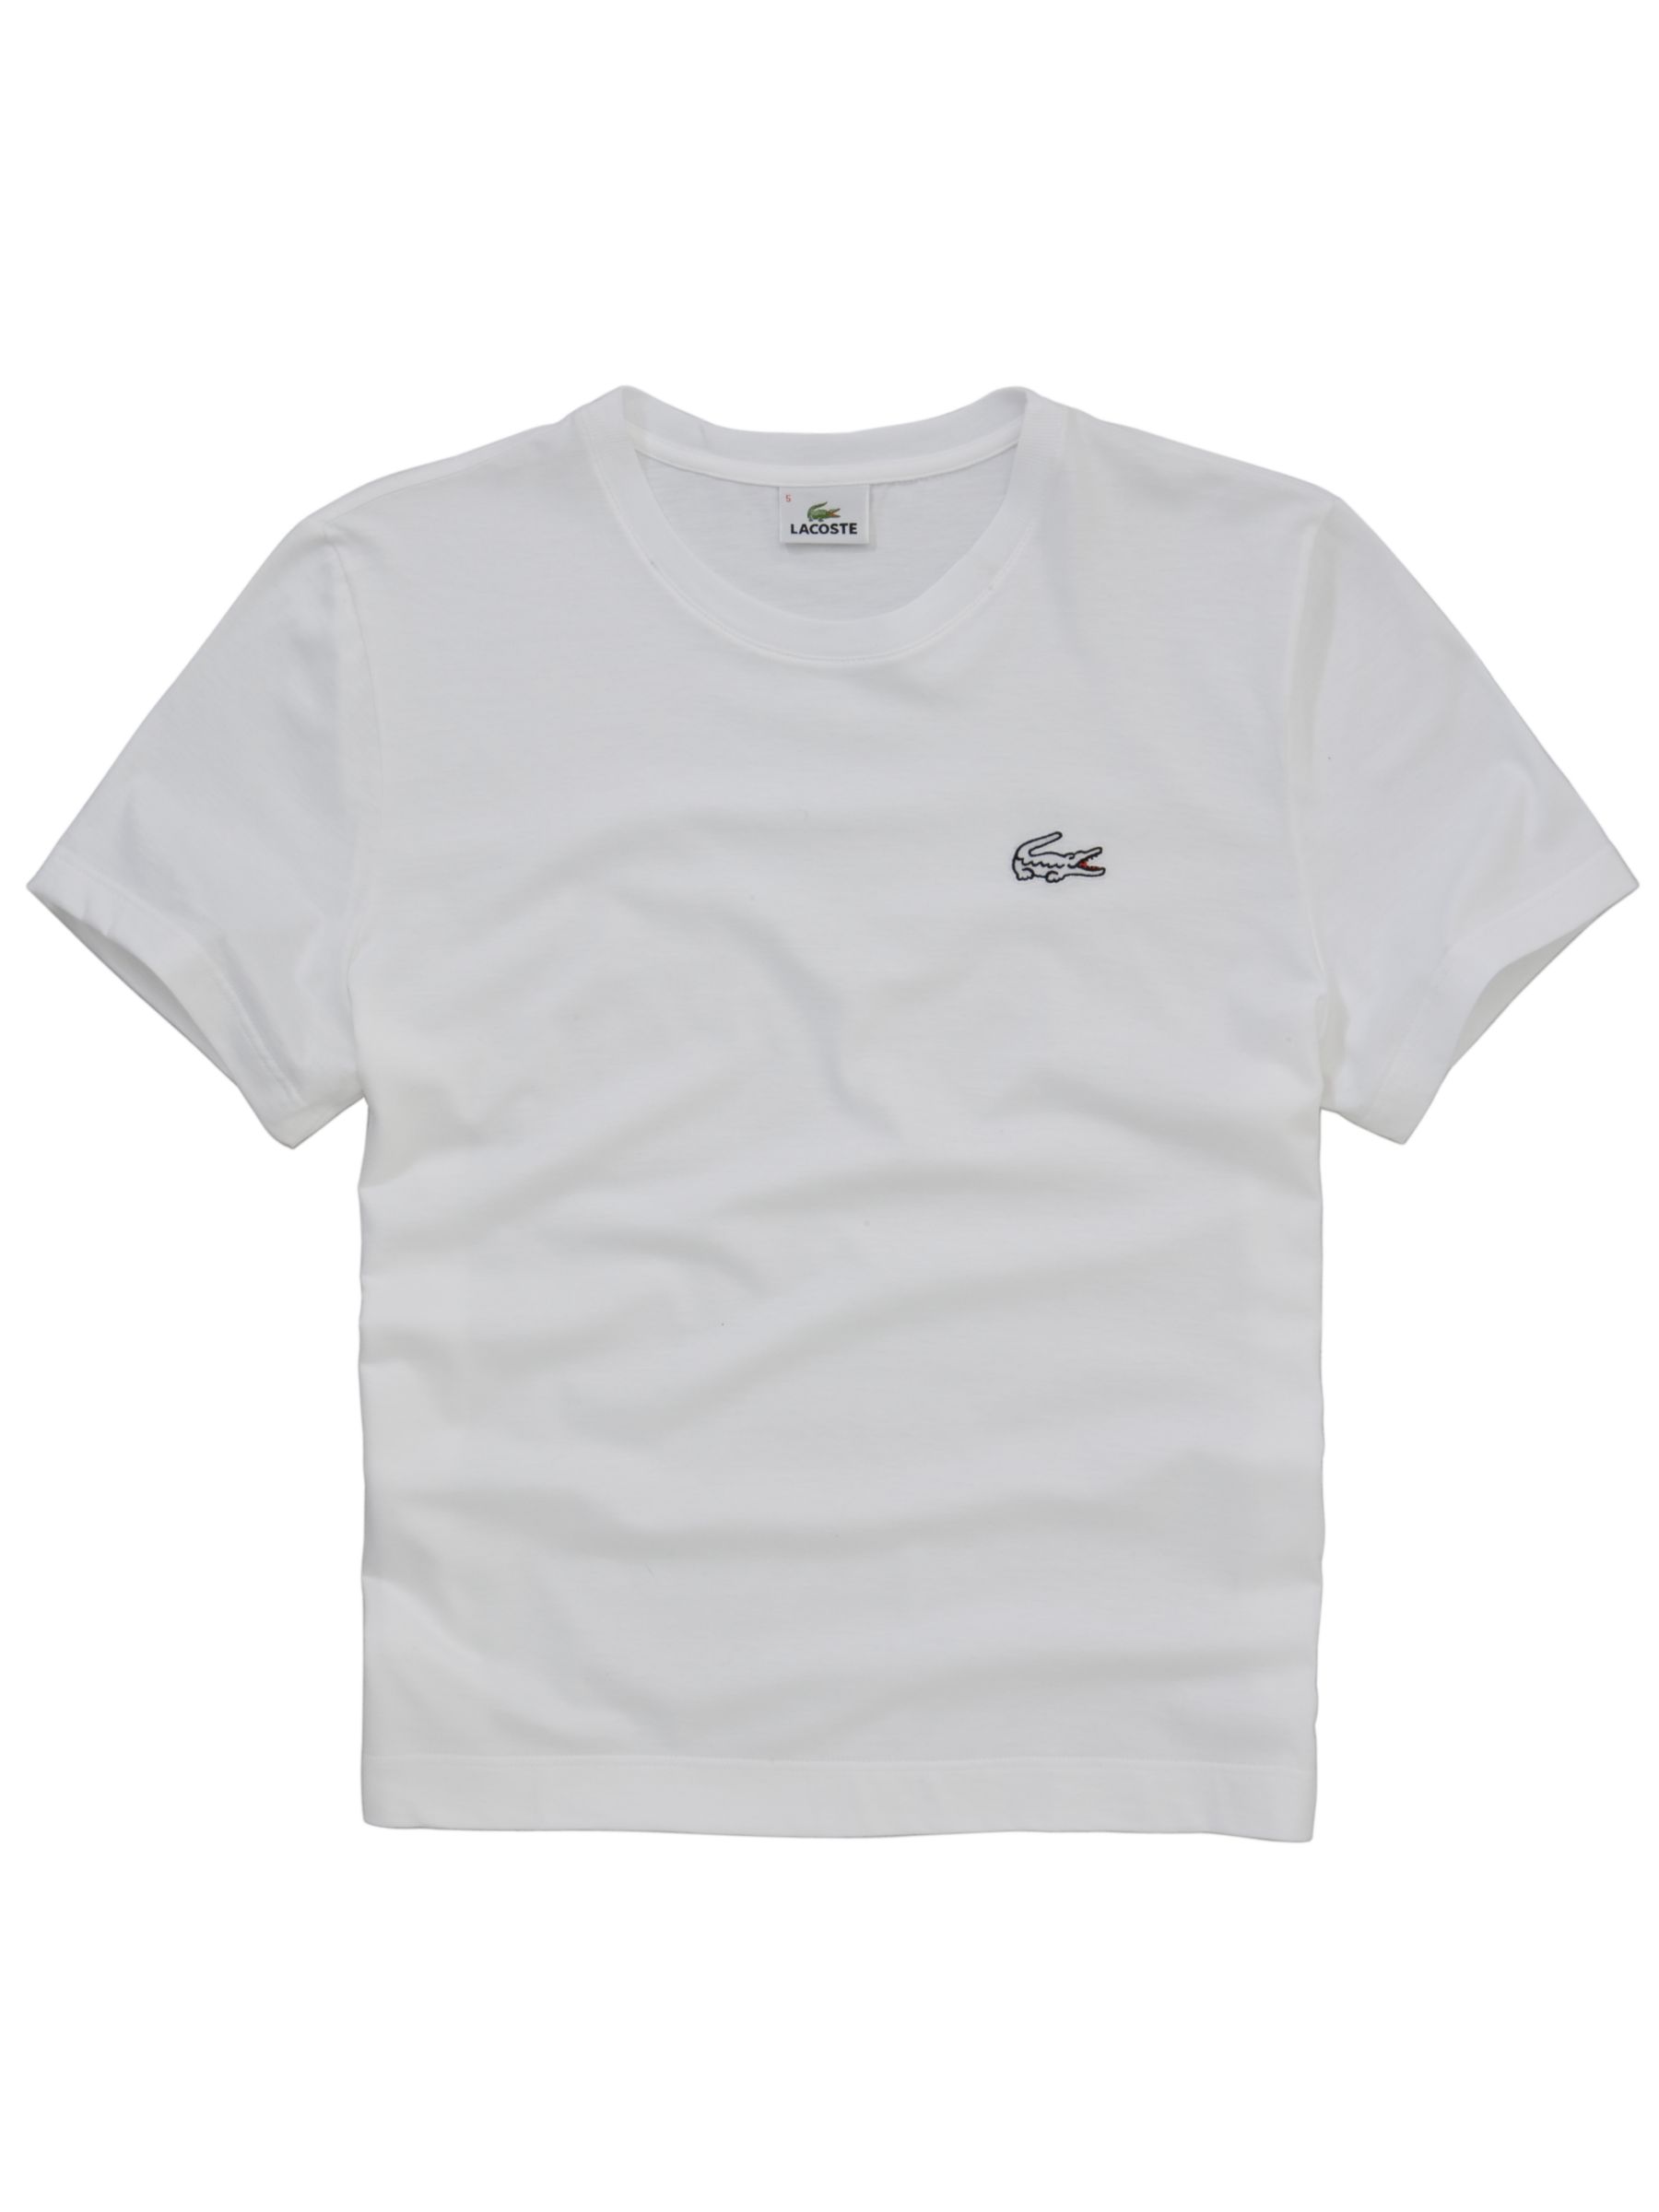 Lacoste Tonal Logo T-Shirt, White